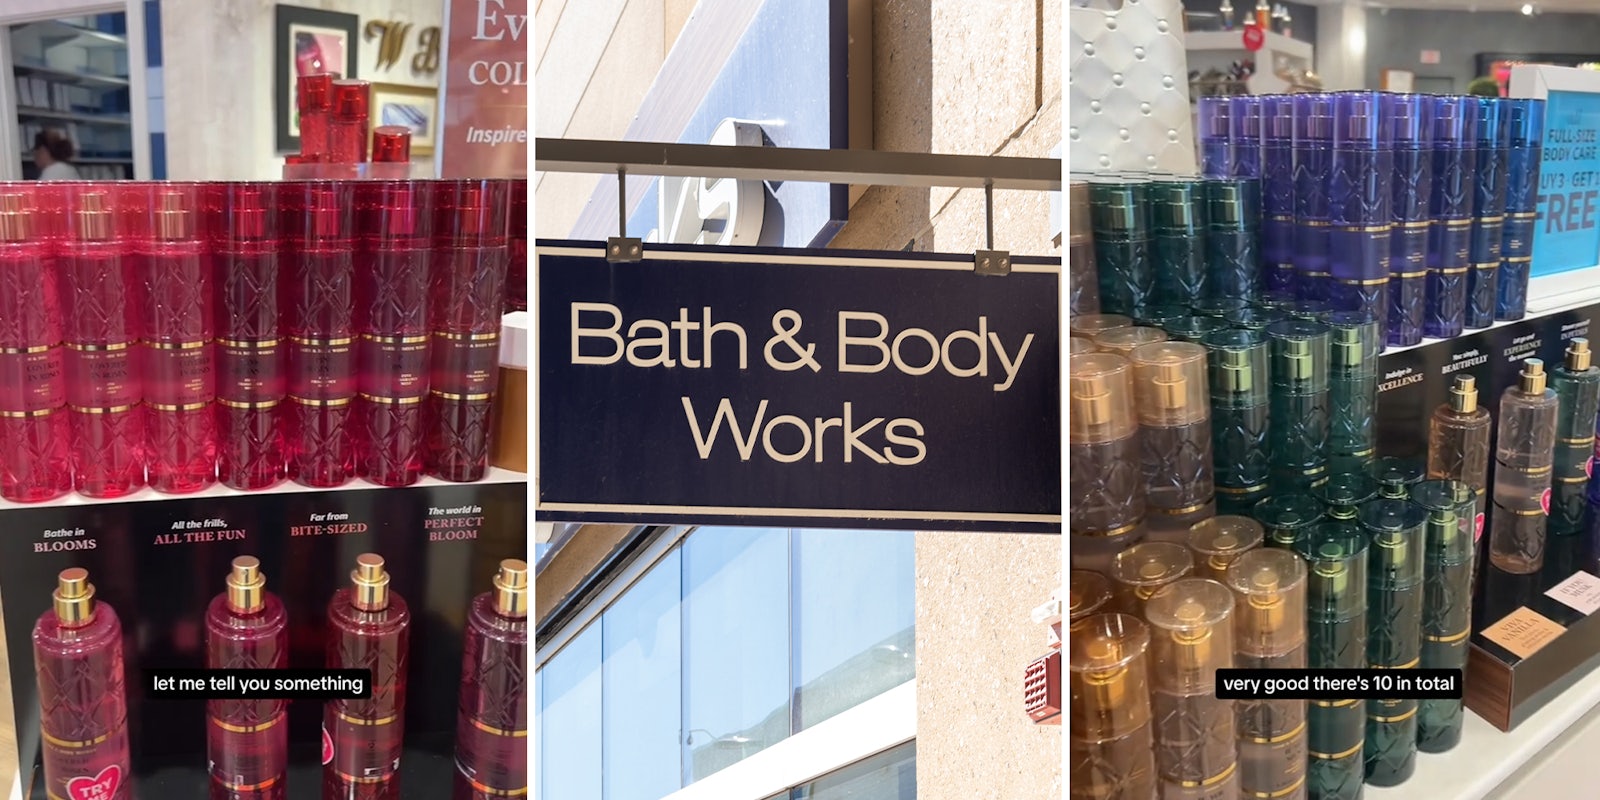 Customer says Bath & Body Works now has perfume dupes for major designer fragrances